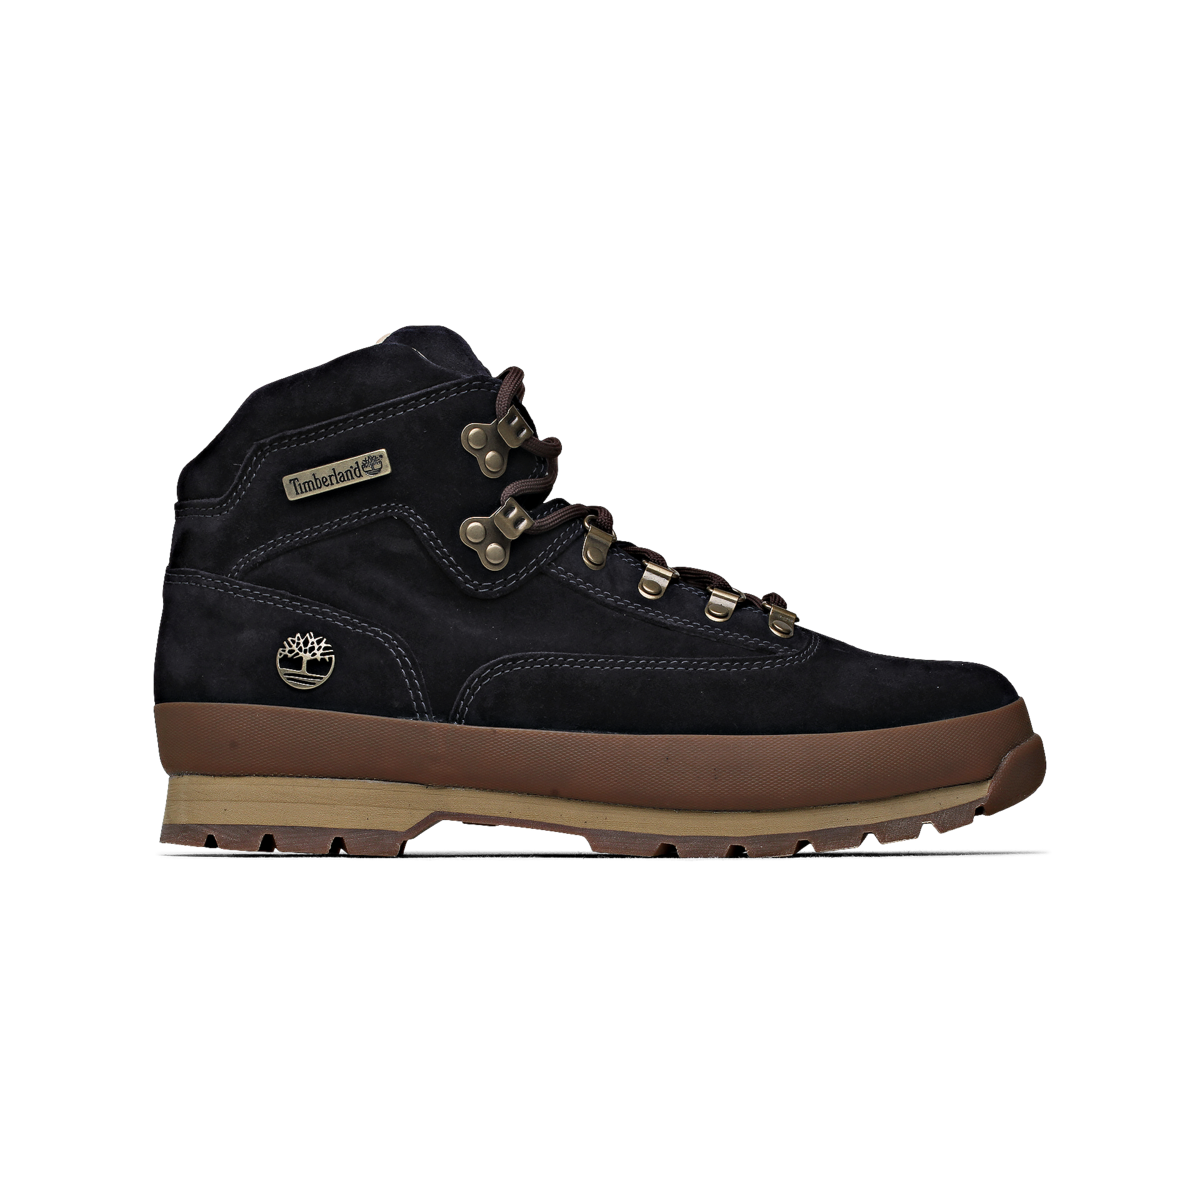 C.F. Stead Euro Hiker Boots